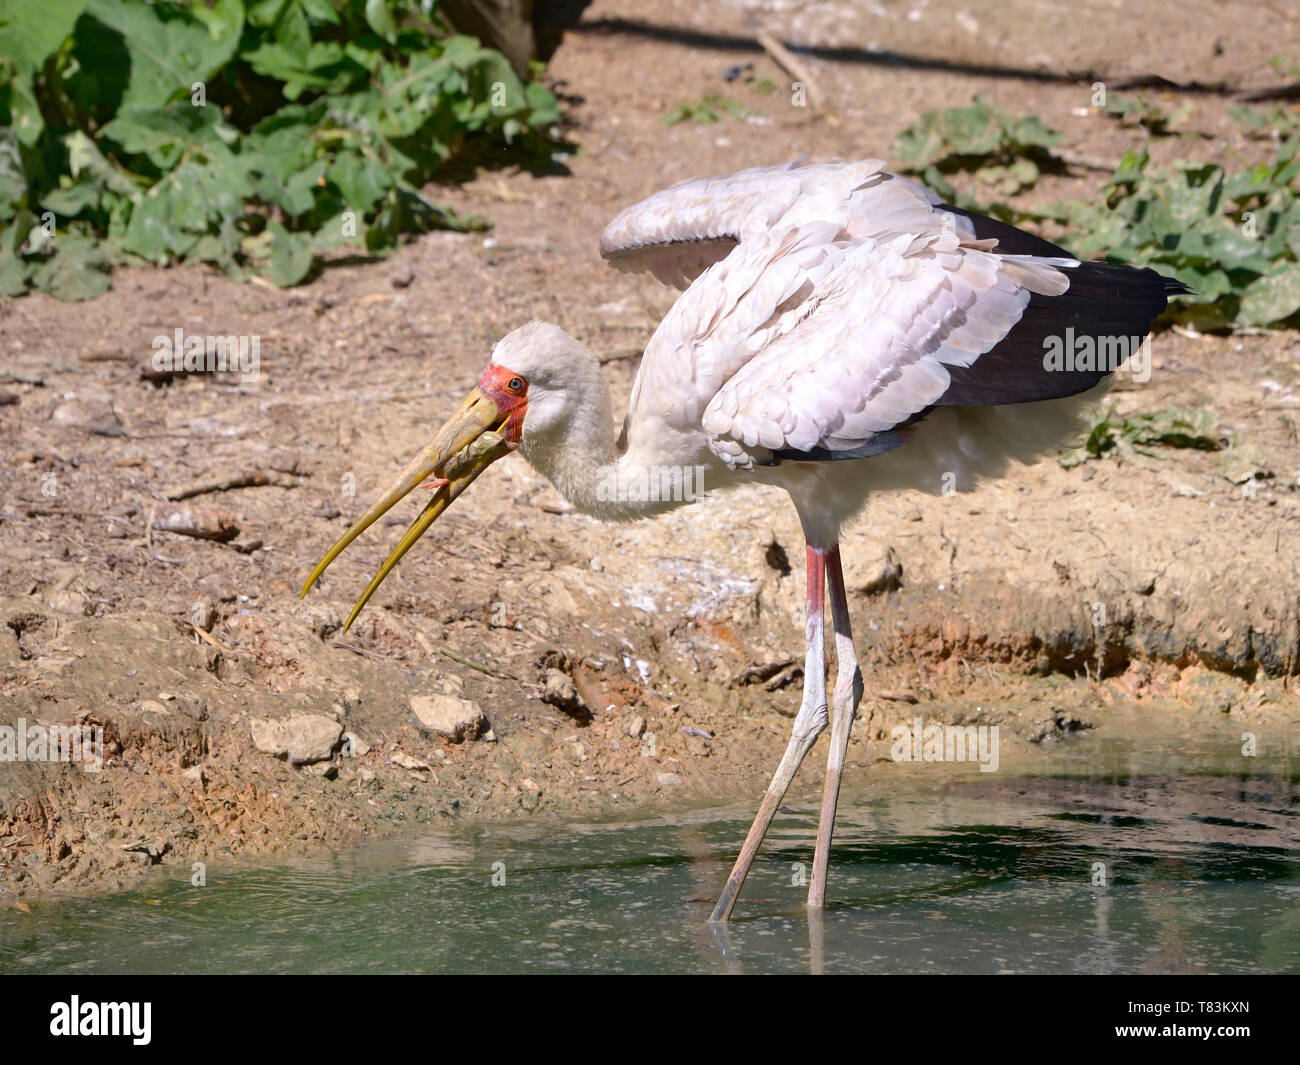 Yellow-billed stork (Mycteria ibis) in water eating chick Stock Photo